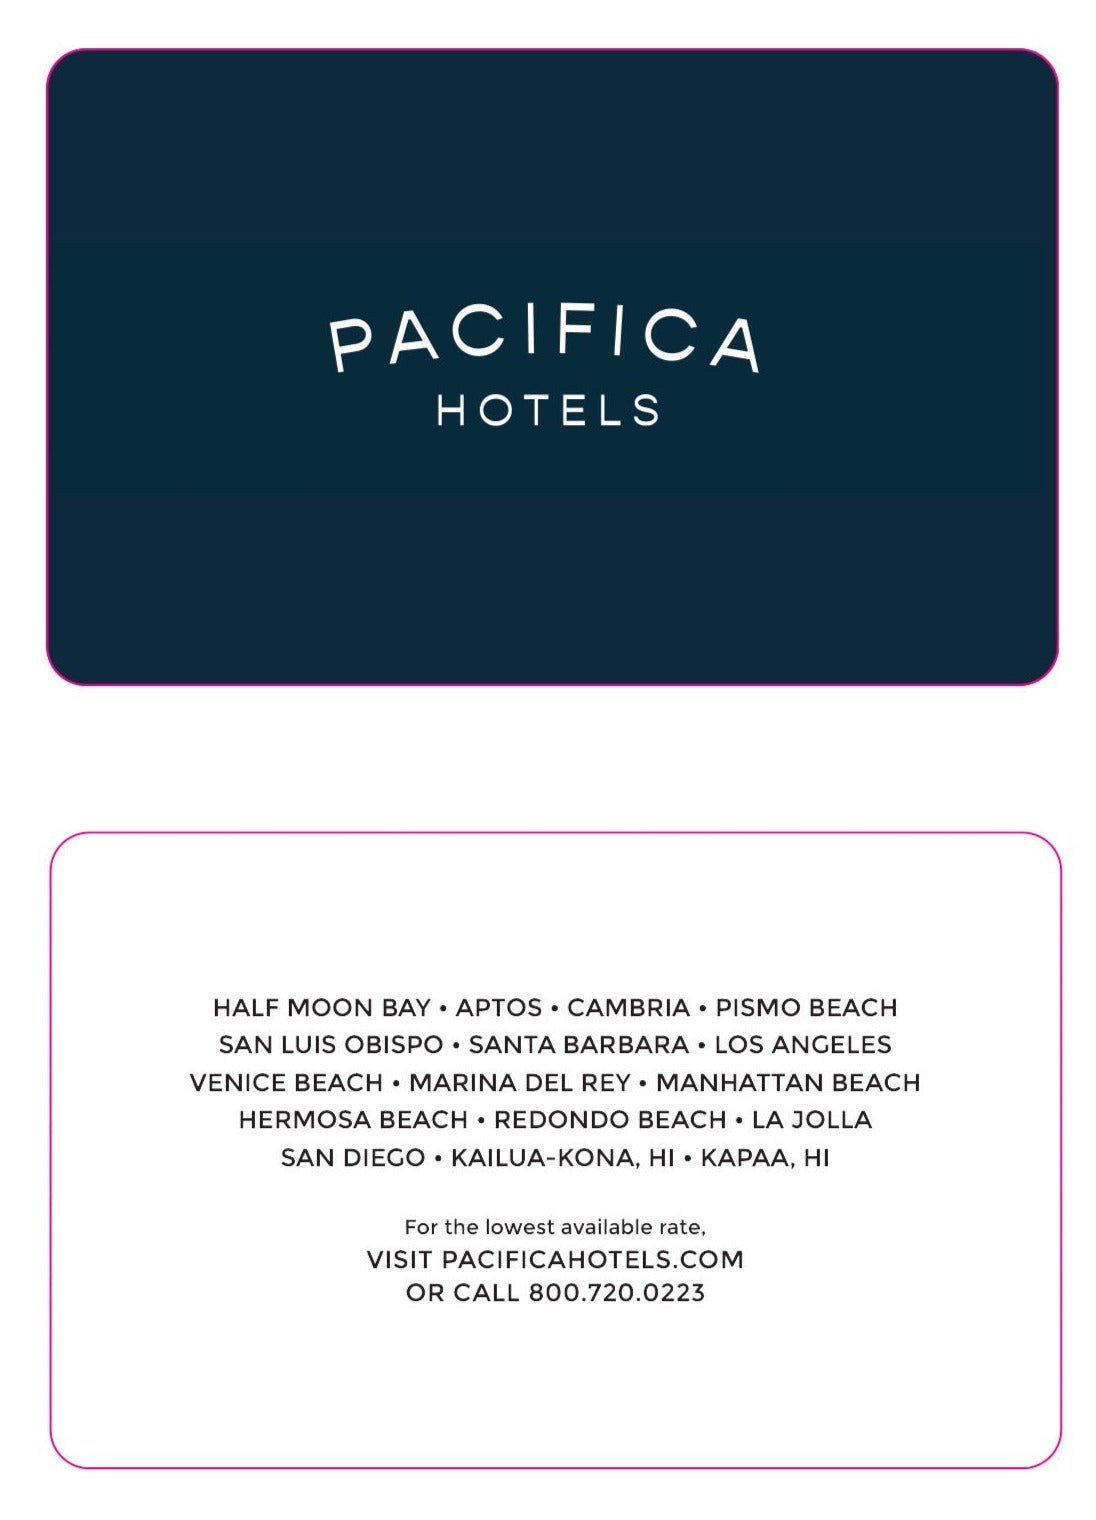 Pacifica Hotels VG3 RFID Key Cards (500 cards per box / $480 per box)